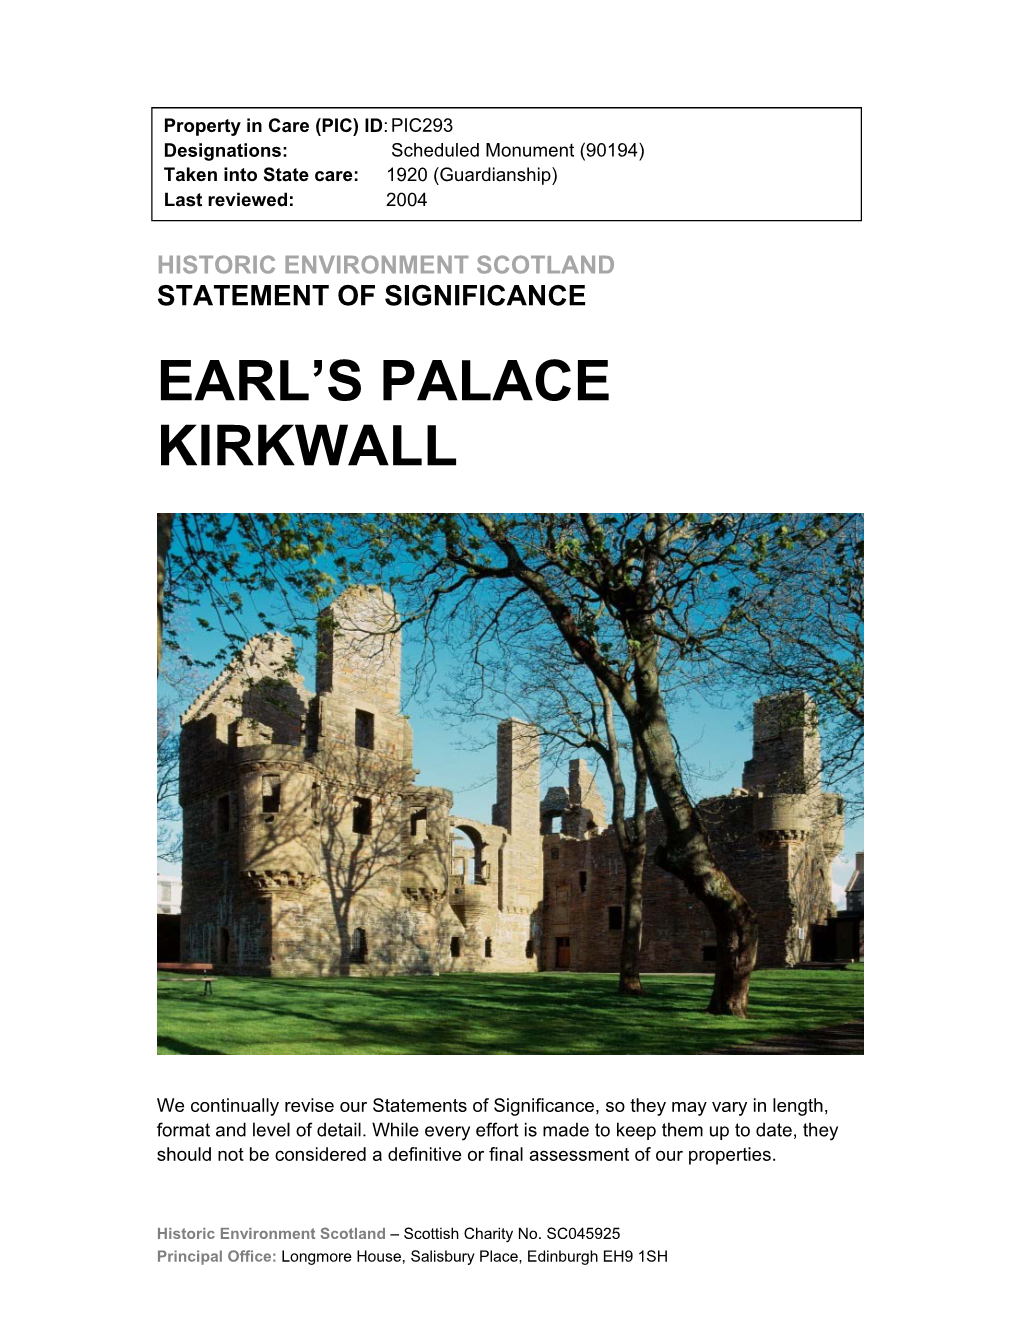 Earl's Palace Kirkwall